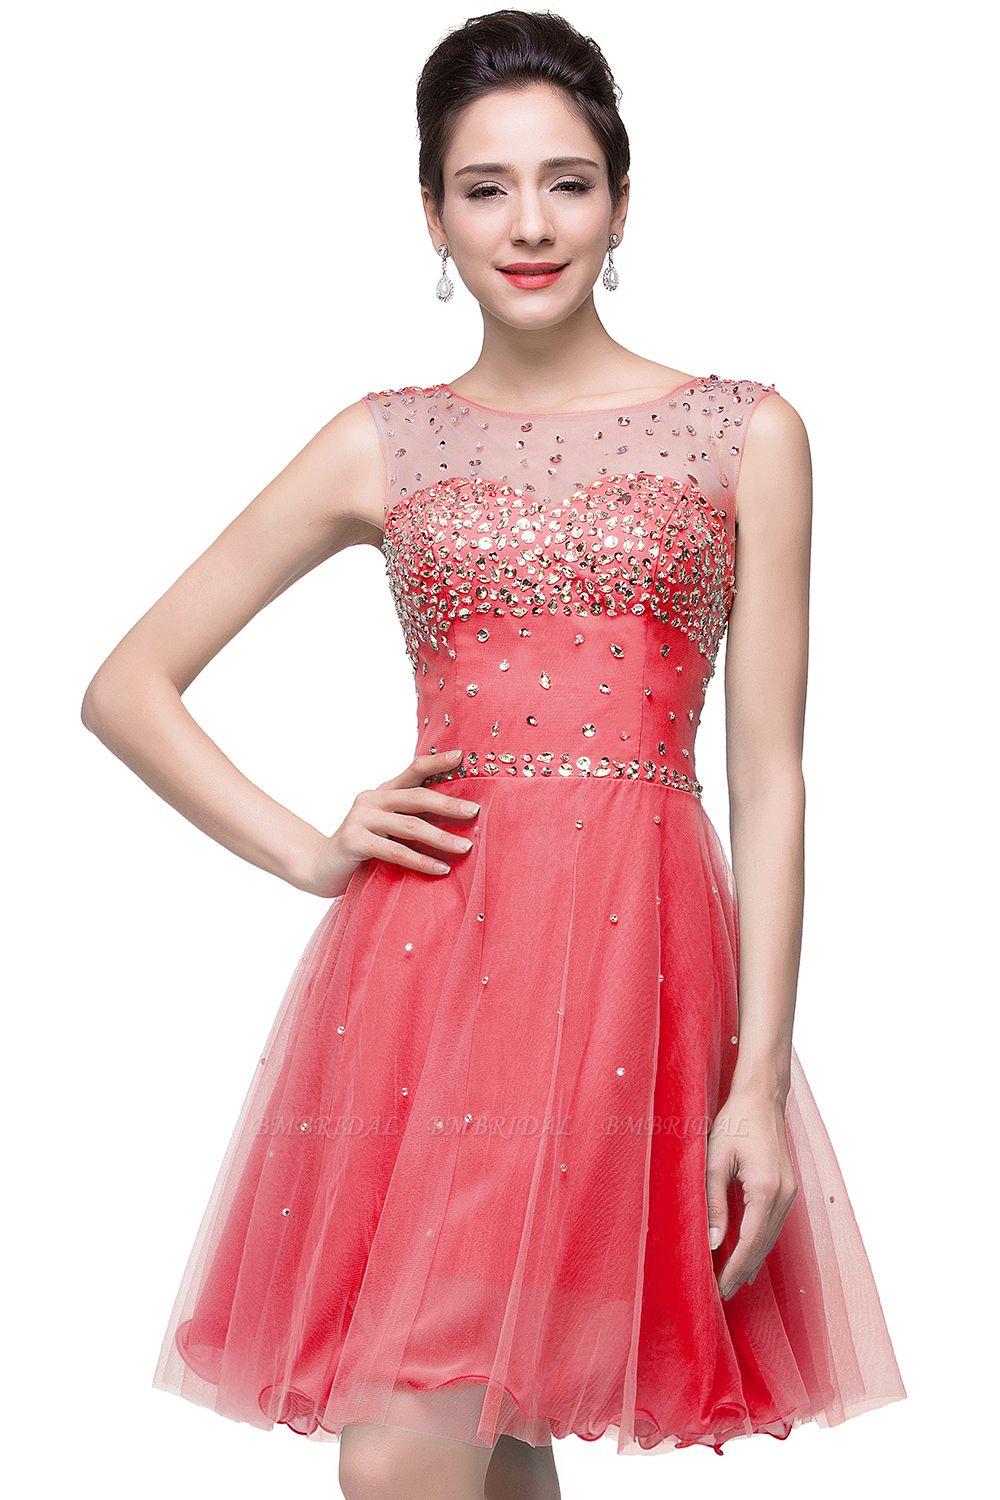 BMbridal Open Back Sleeveless Chiffon Homecoming Dress Crystal Beads Tüll Short Prom Dress